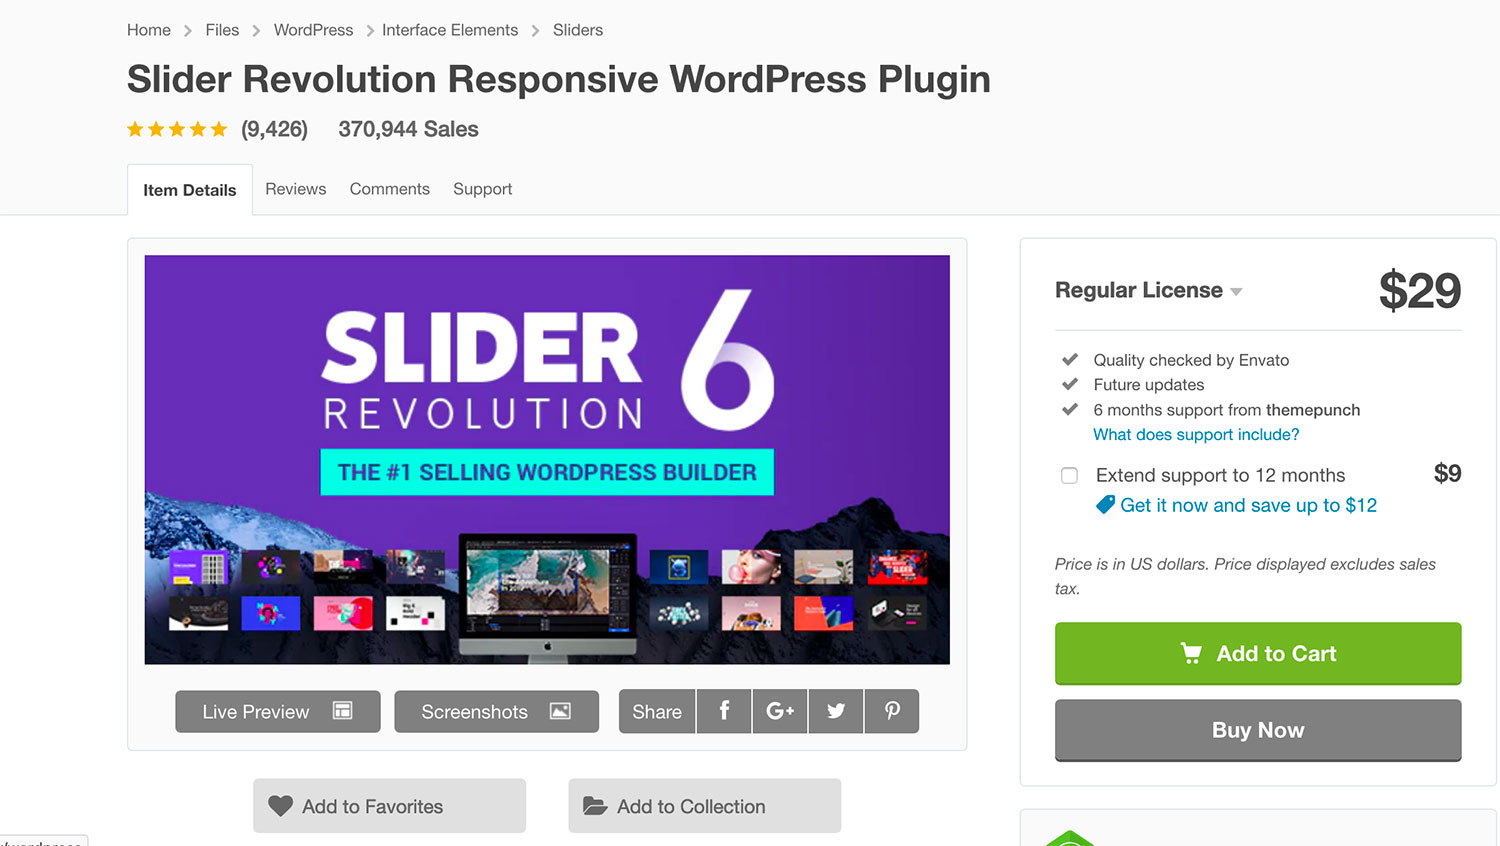 Slider Revolution WordPress Plugin Review – Should You Buy It?